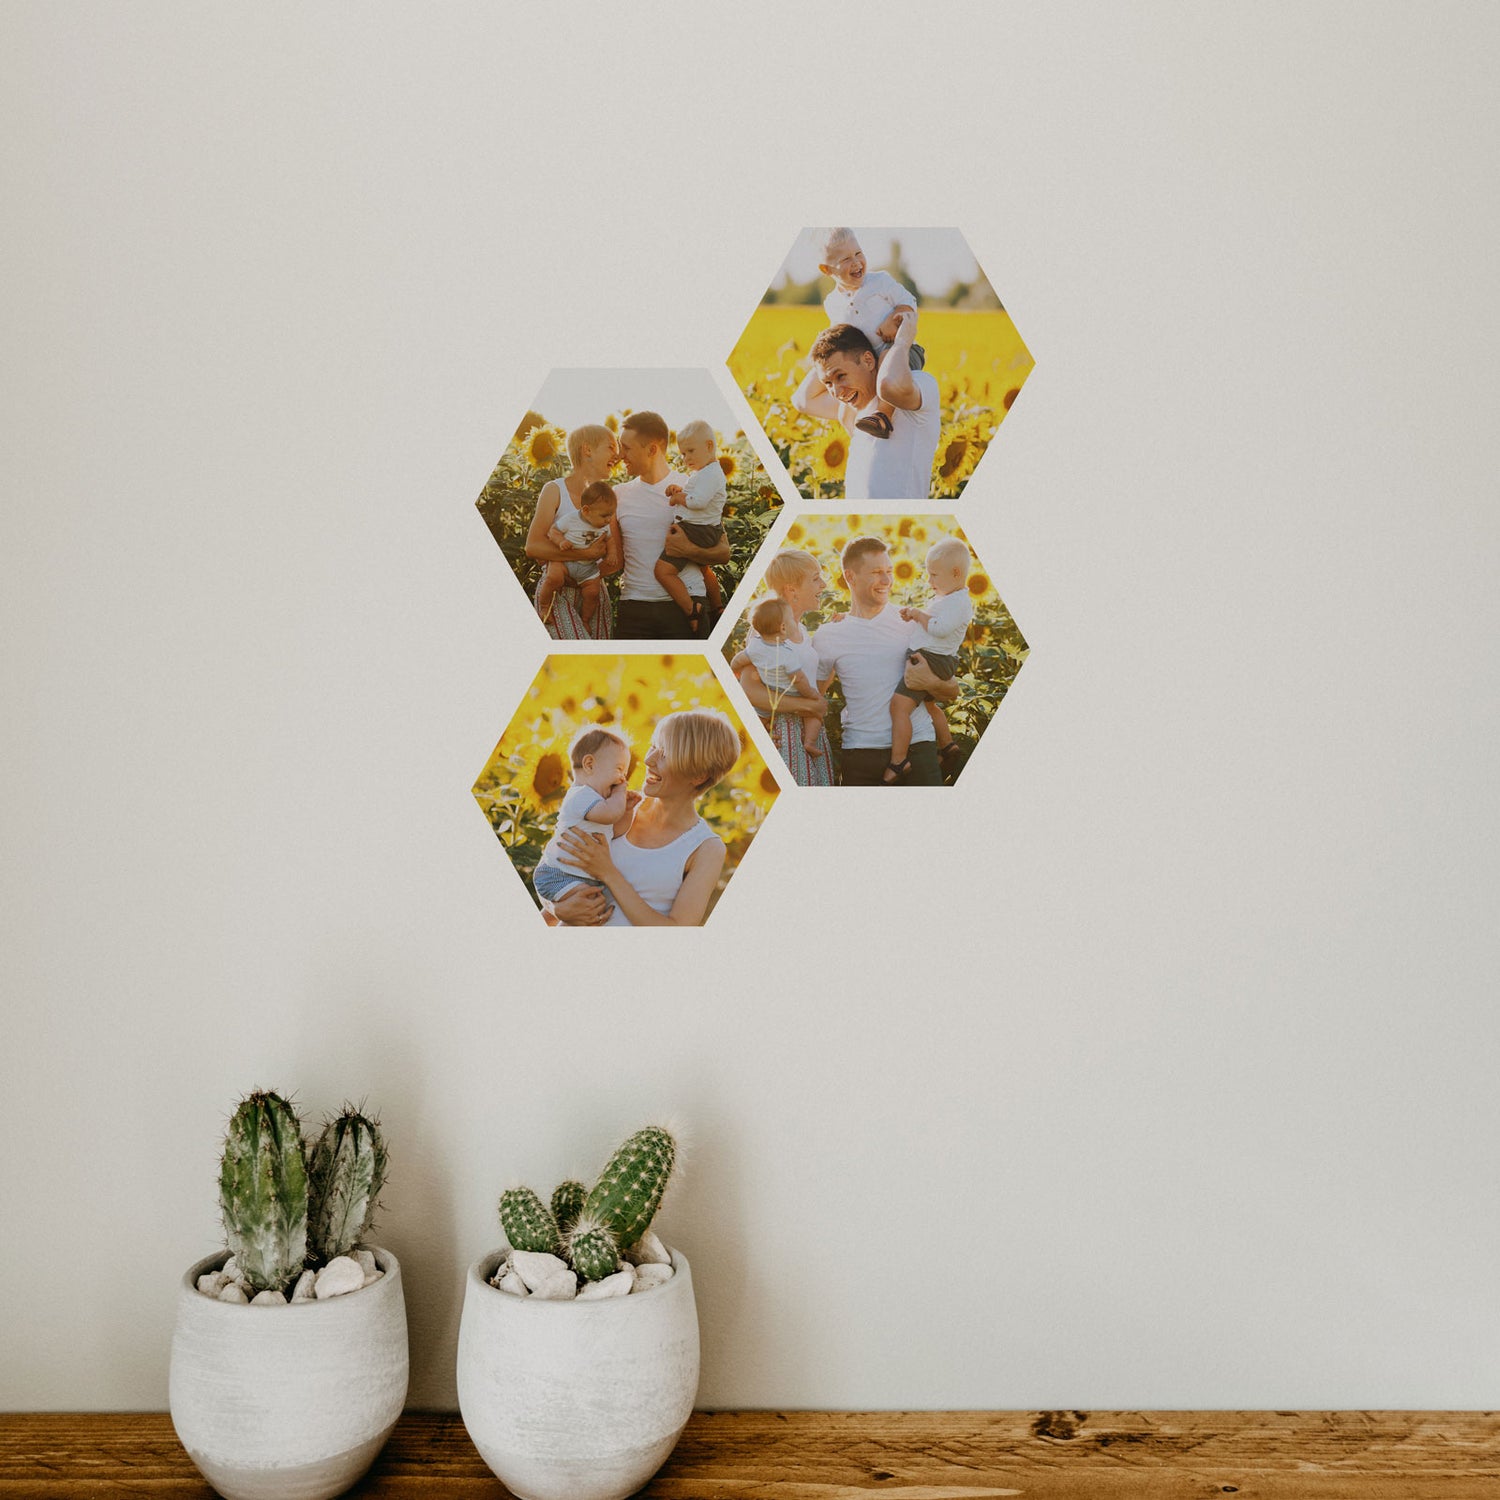 Mini Hexagonal Photo Wall Decals - A Creative Hart